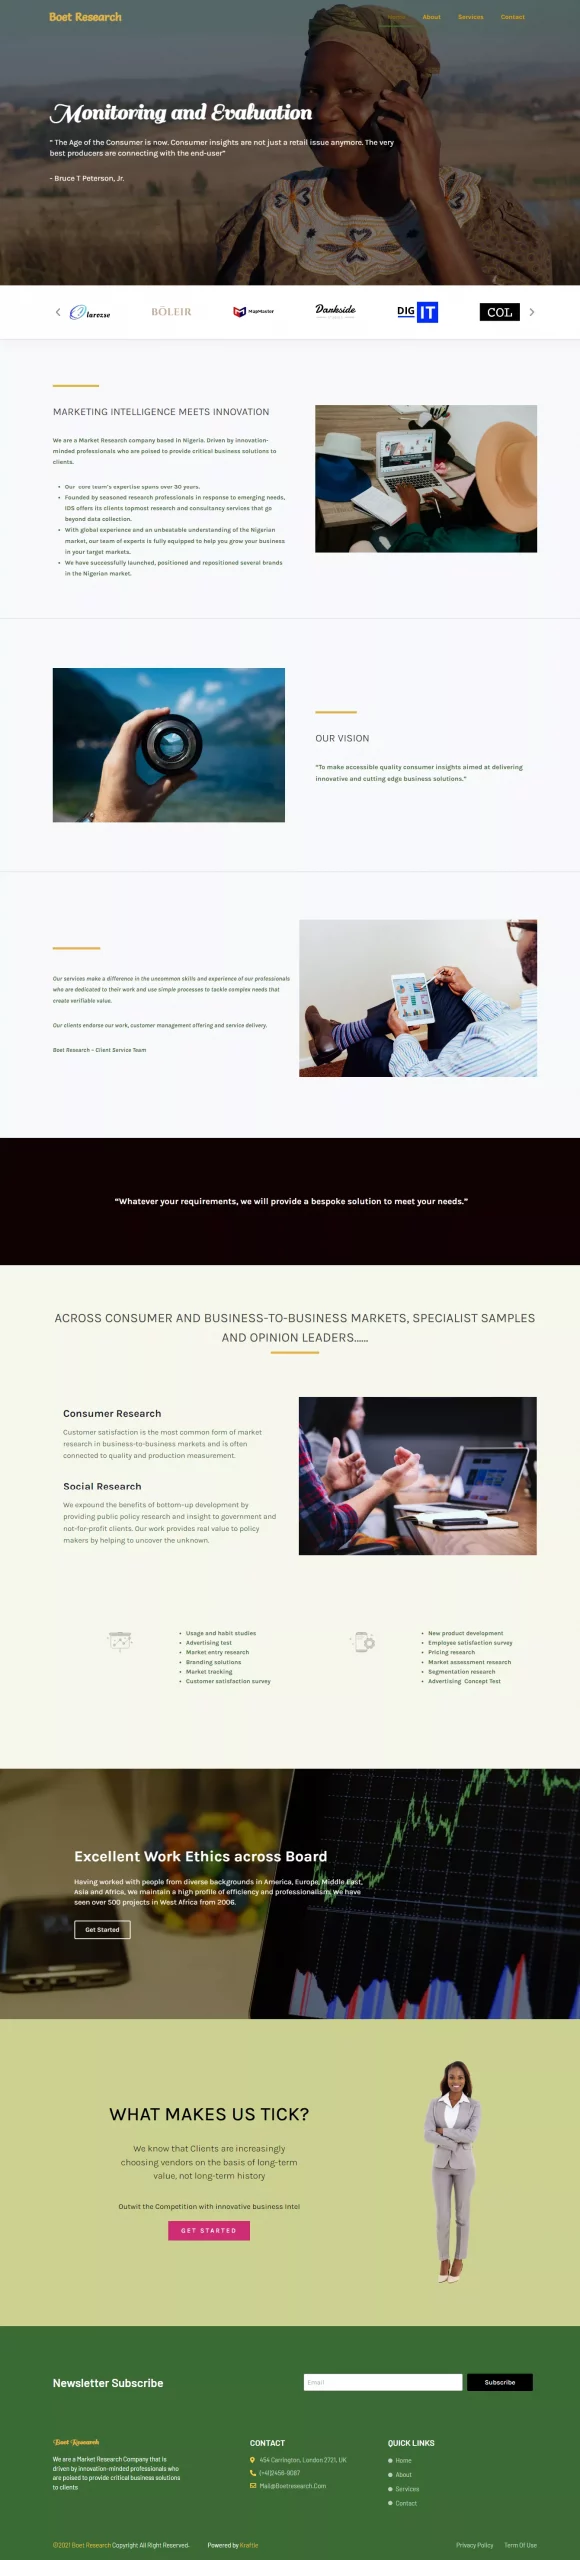 Market Research Company Website design